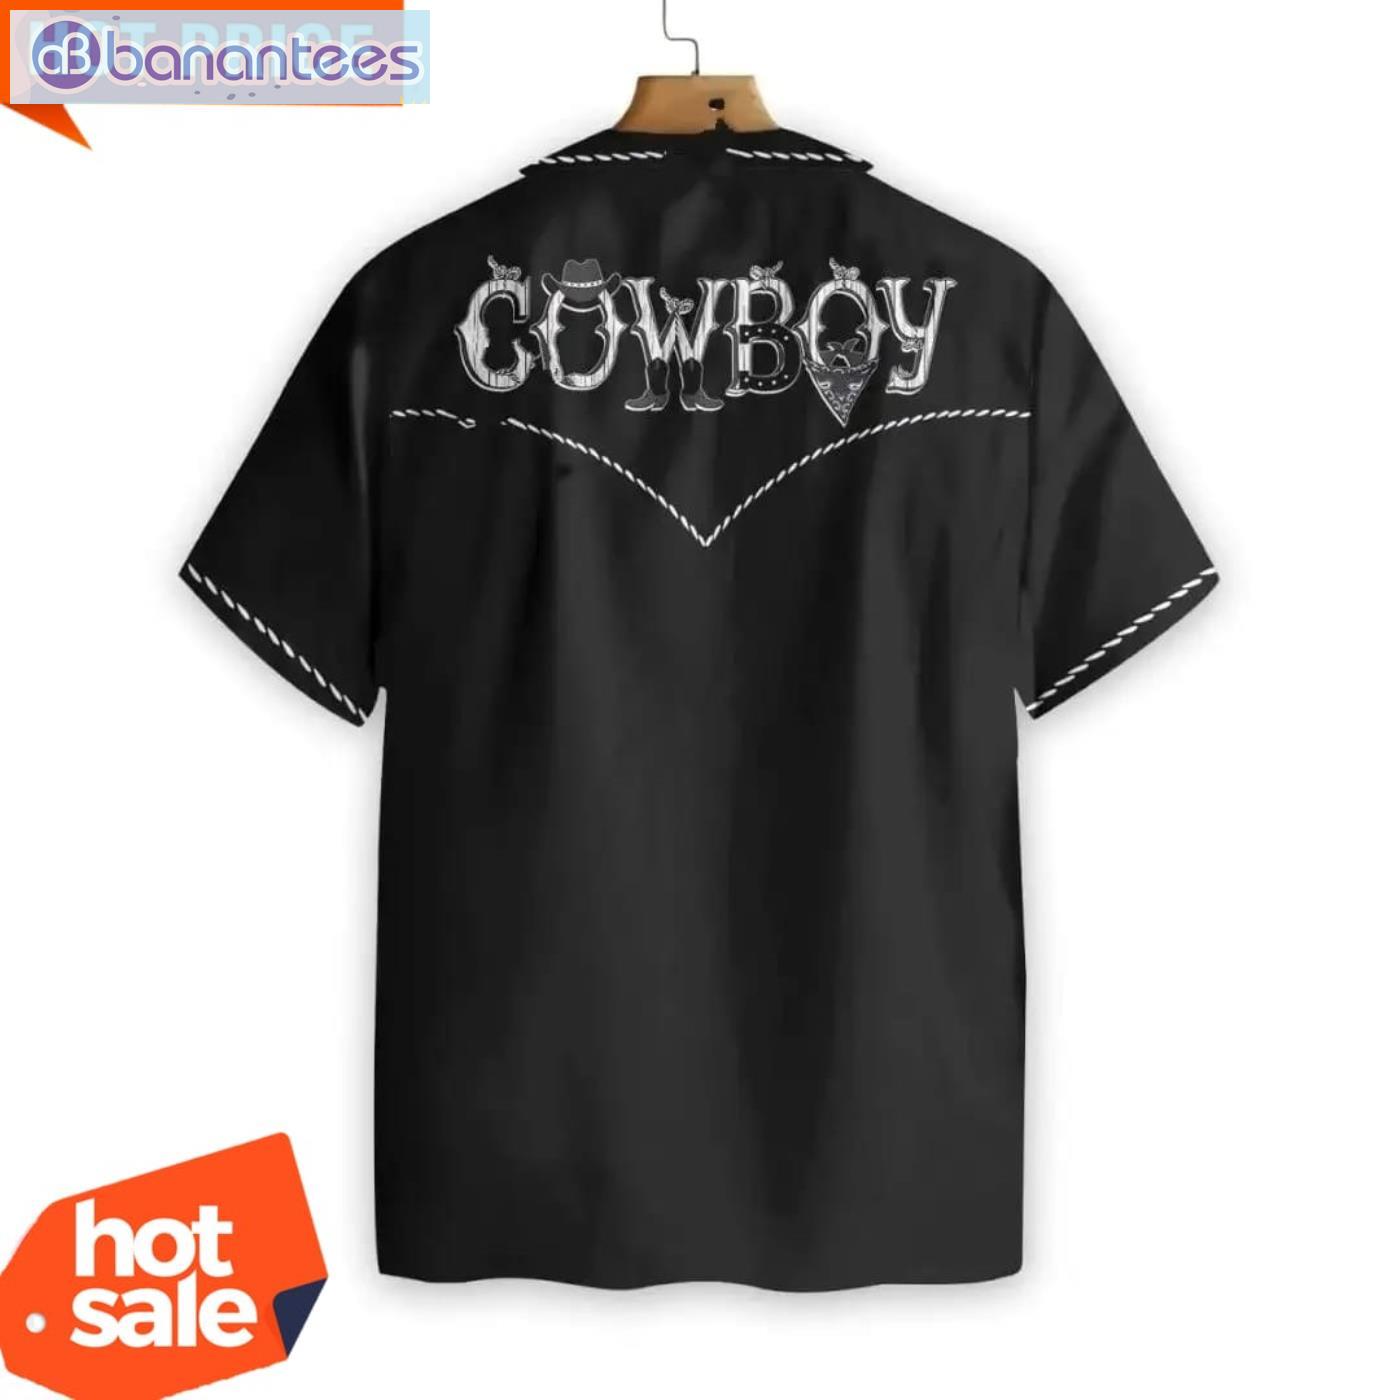 Cowboy Rodeo Texture Hawaiian Shirt Vintage Embroidered Texas Western Shirt Product Photo 2